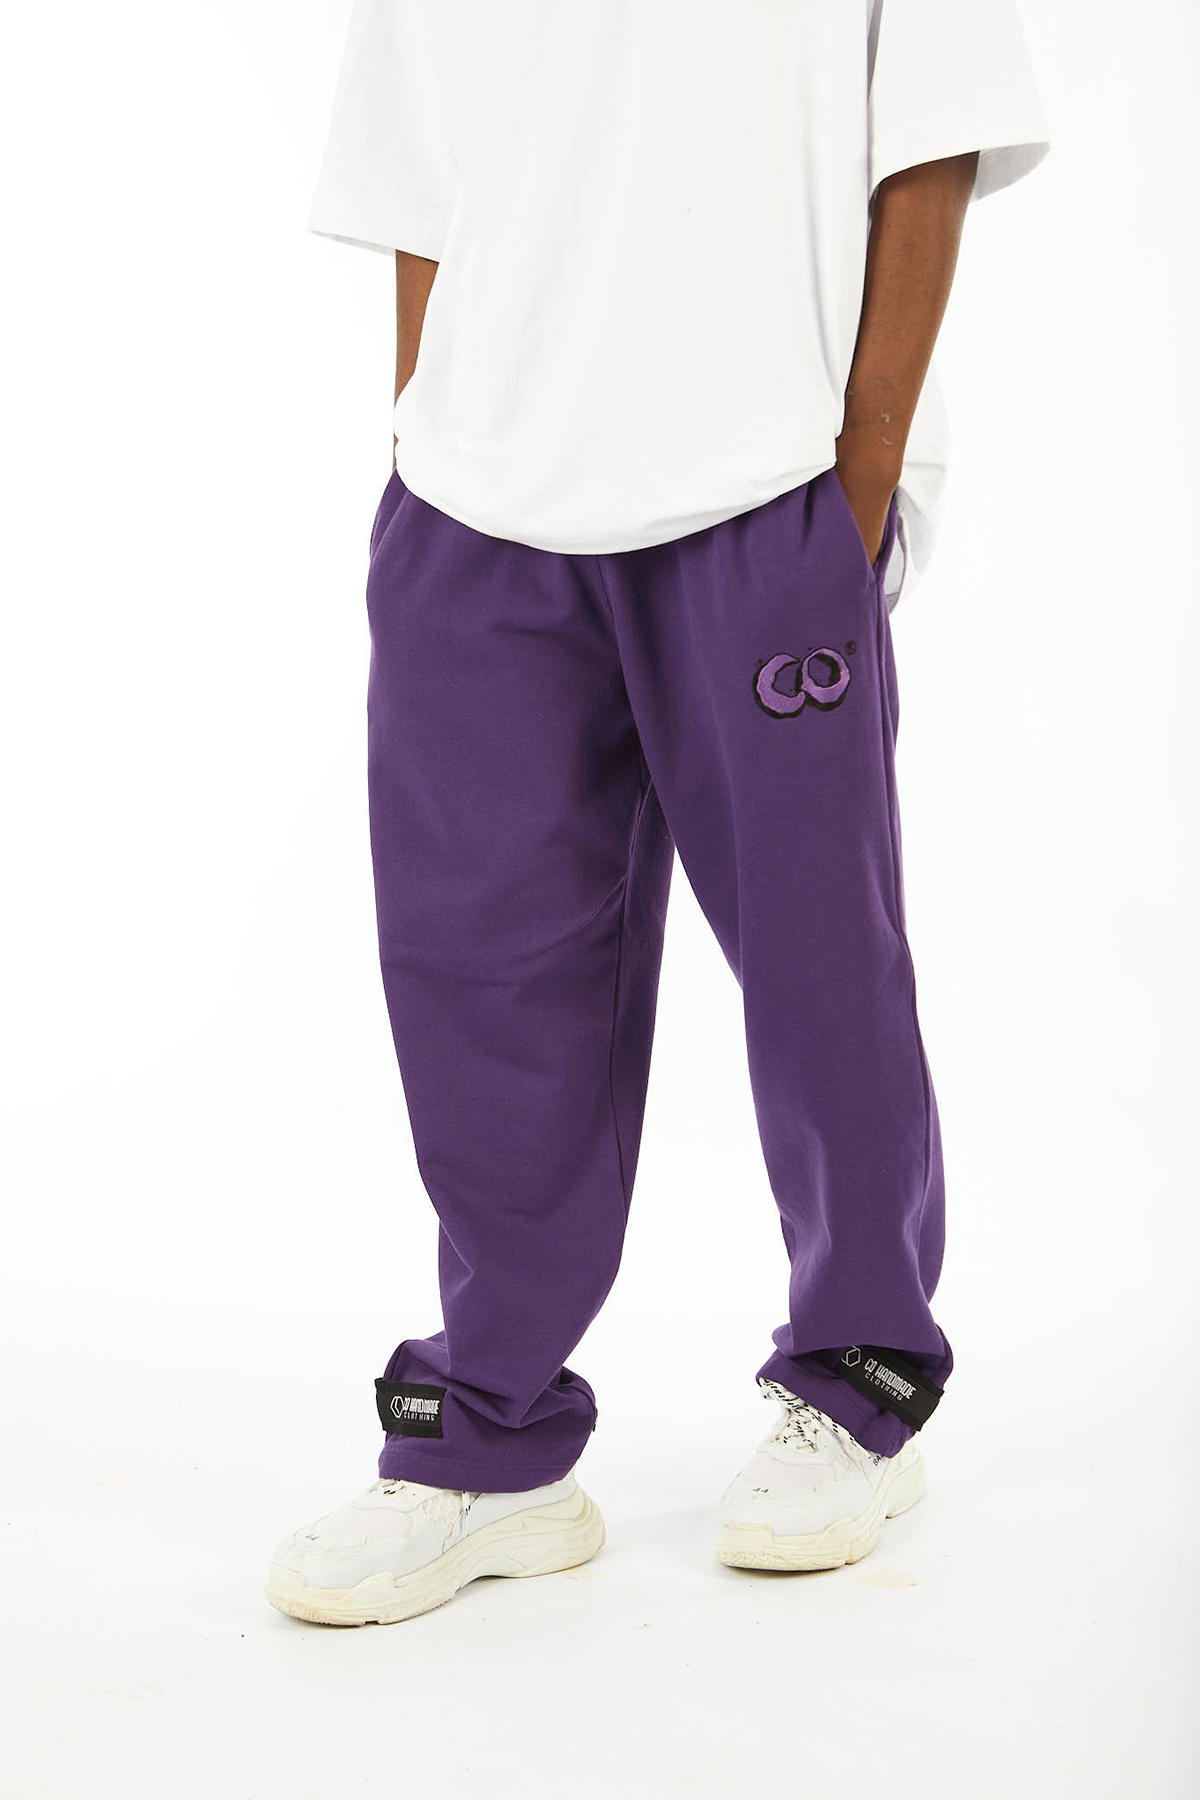 acting-crazy-pants-purple